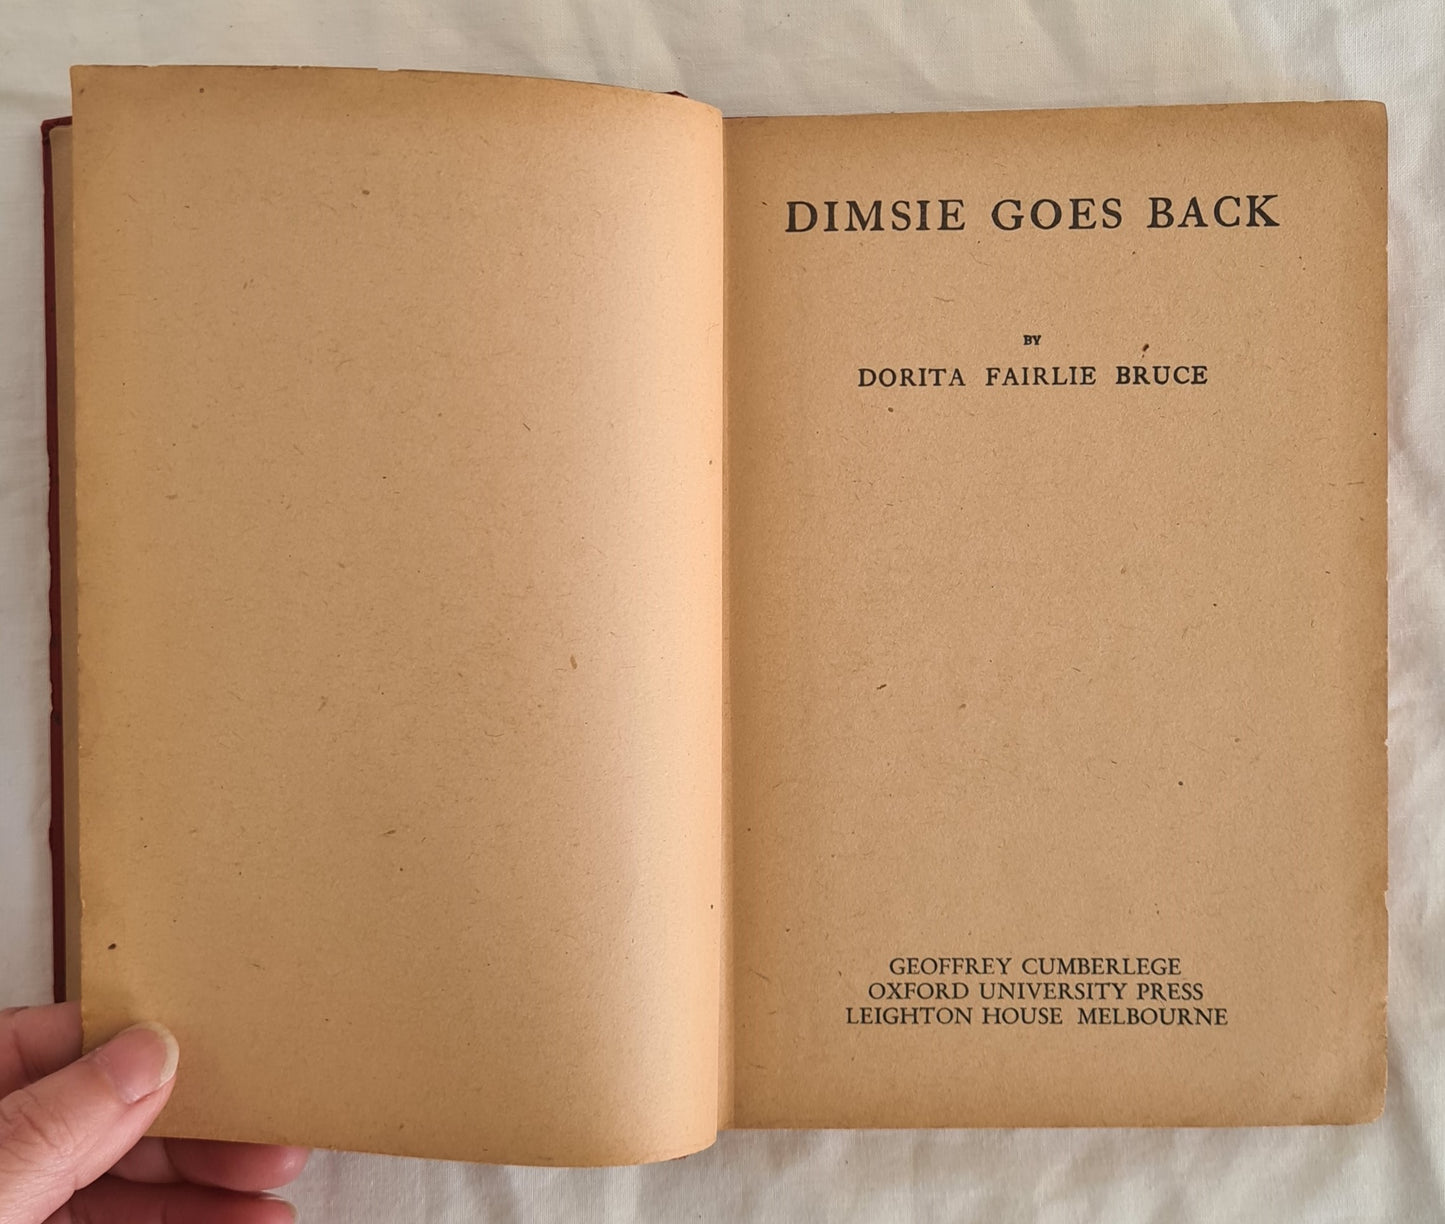 Dimsie Goes Back by Dorita Fairlie Bruce